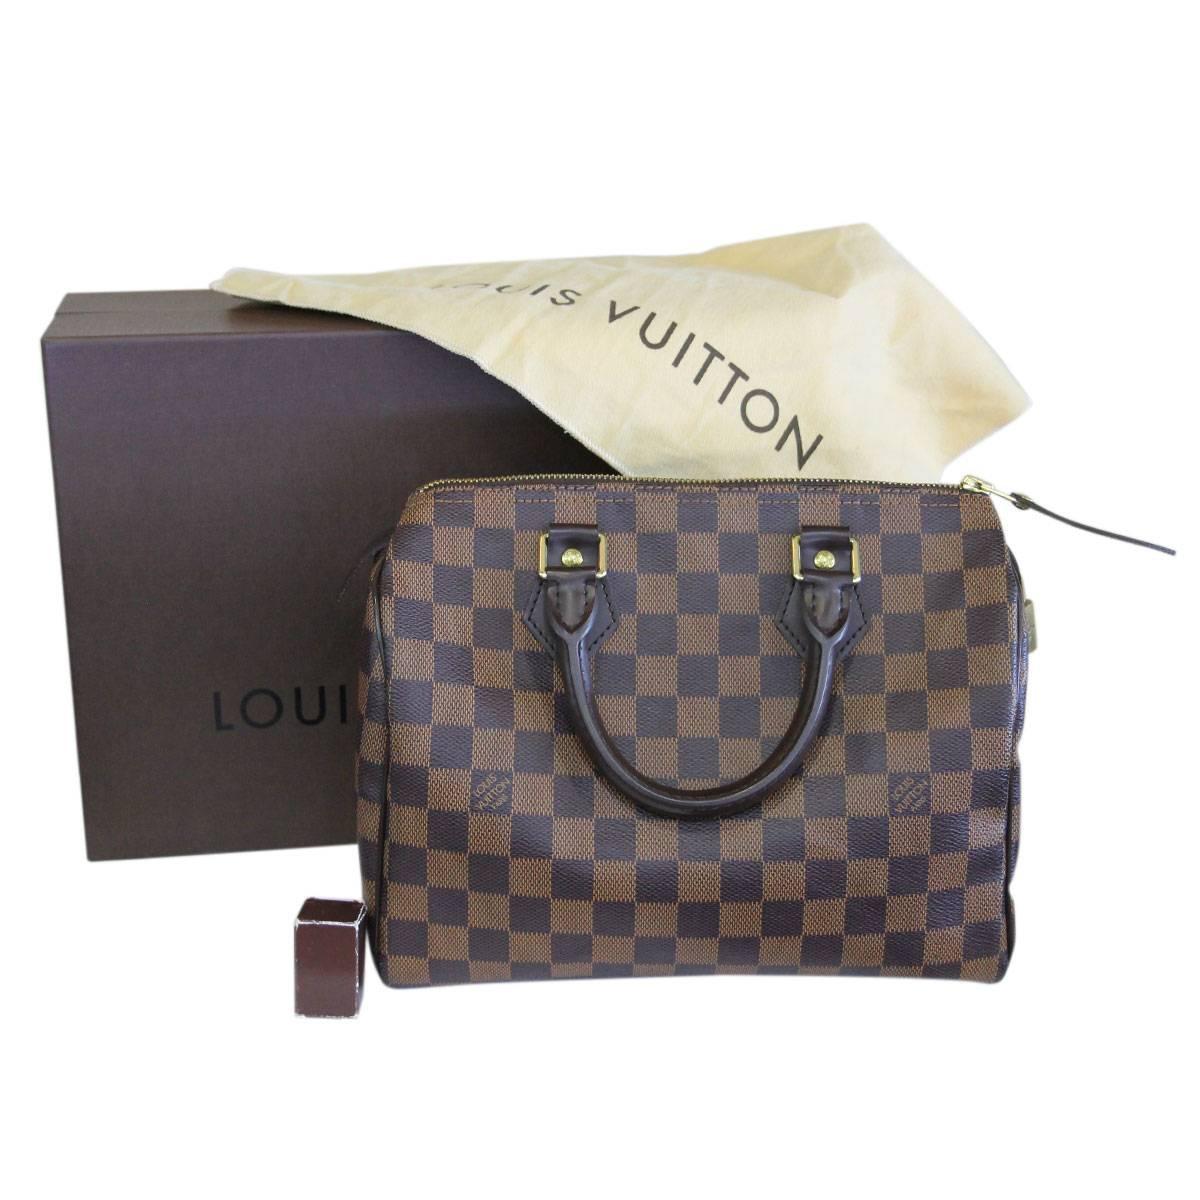 Louis Vuitton Speedy 25 Damier Ebene Handbag in Box 3